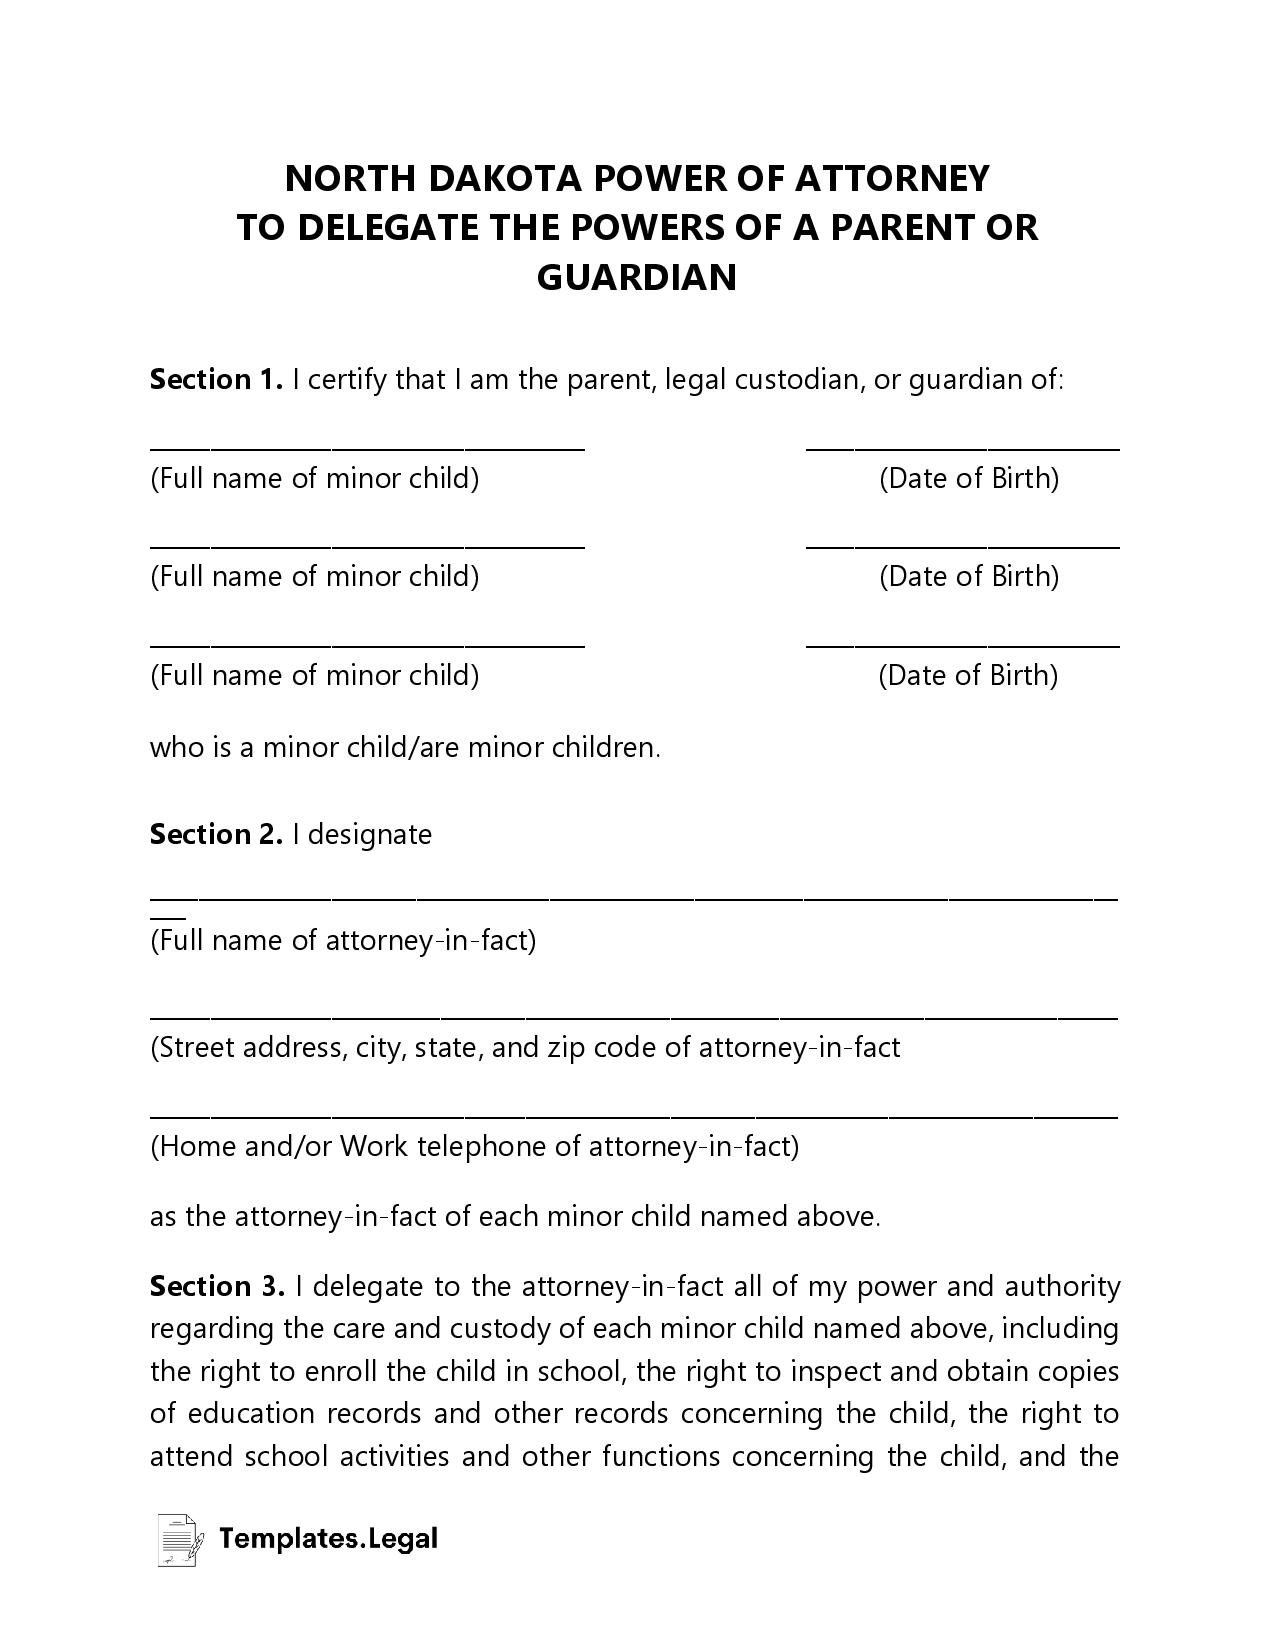 North Dakota Minor (Child) Power of Attorney - Templates.Legal